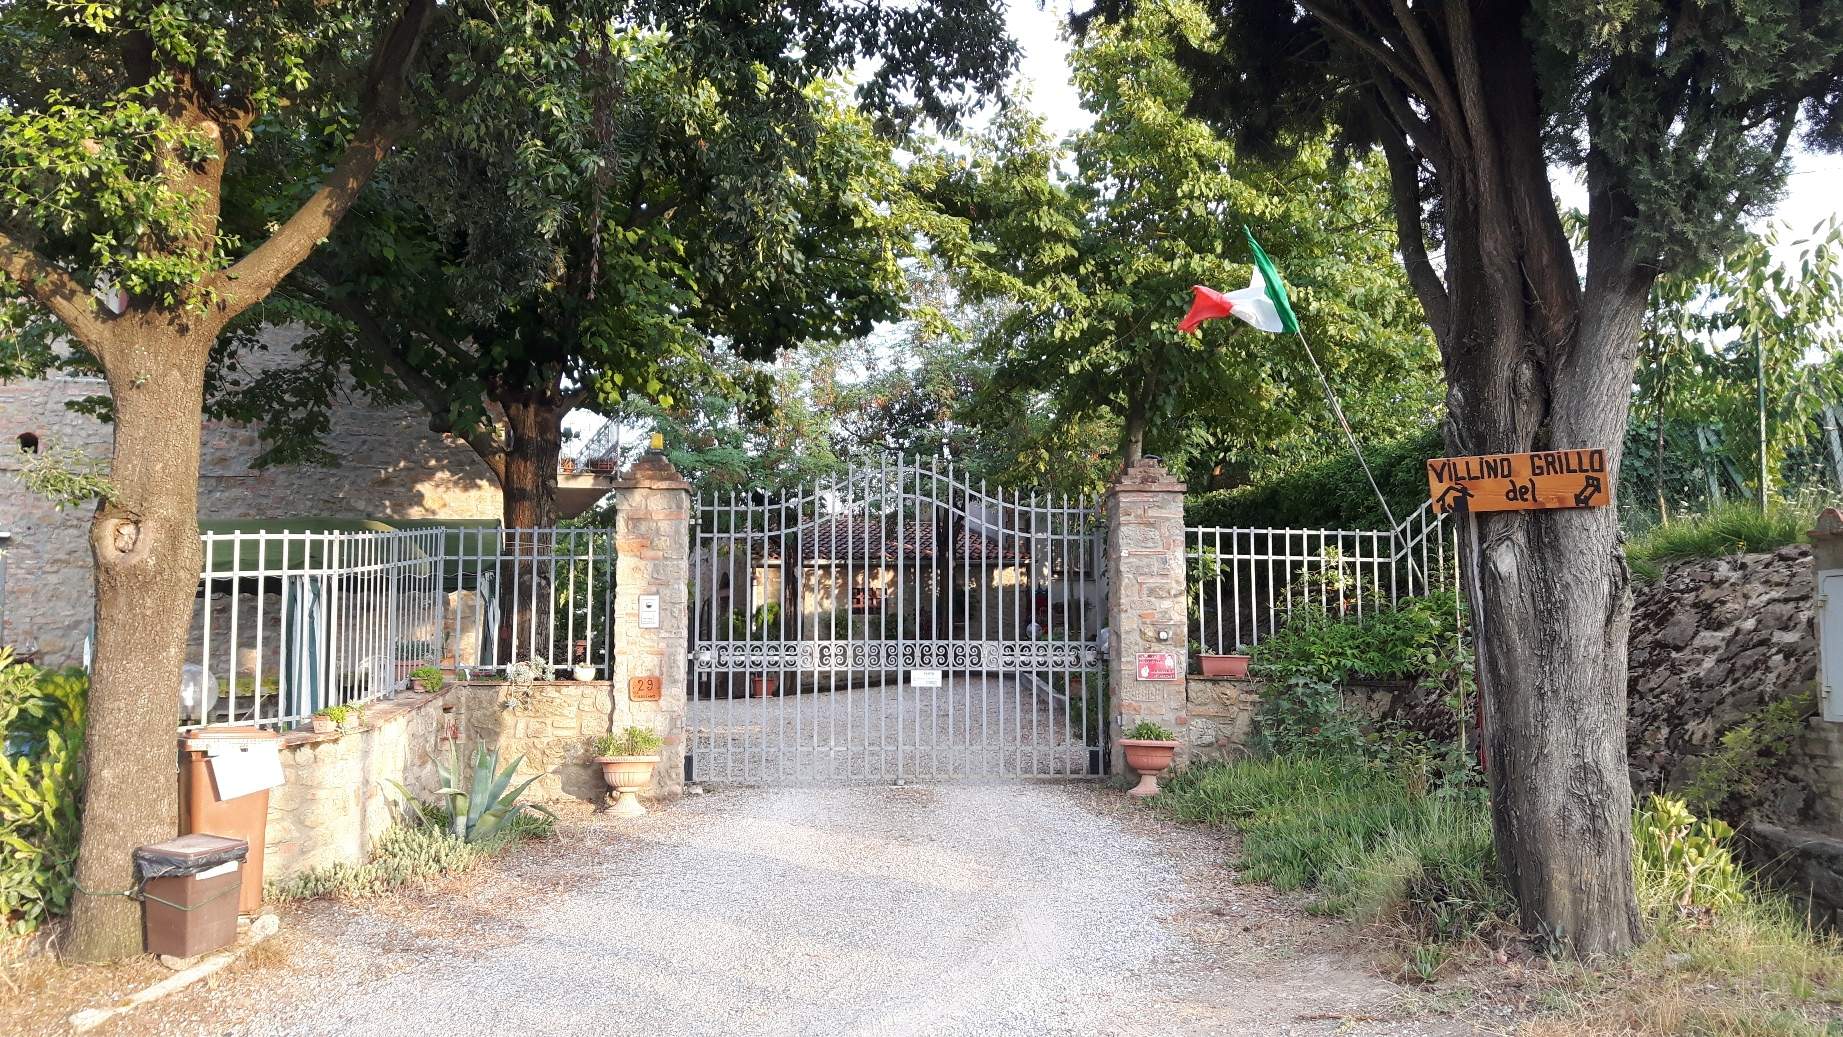 independent entrance Villino del Grillo